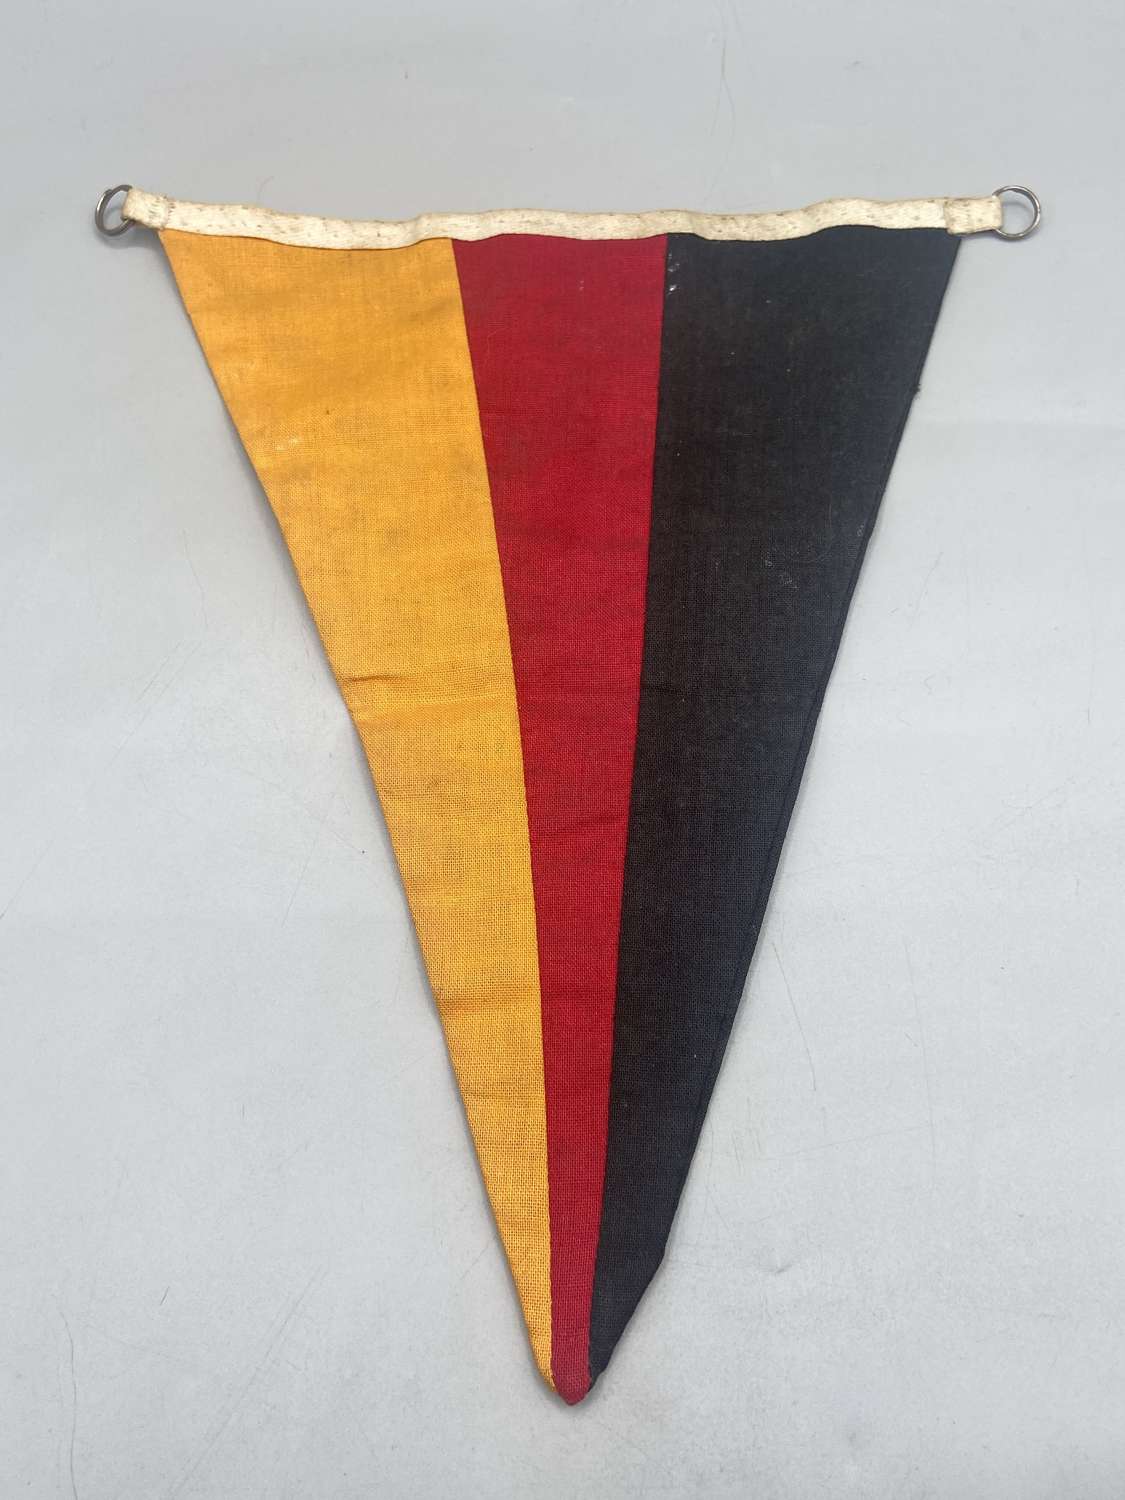 German Weimar Weimar Republic National Flag Pennant 1919 to 1933